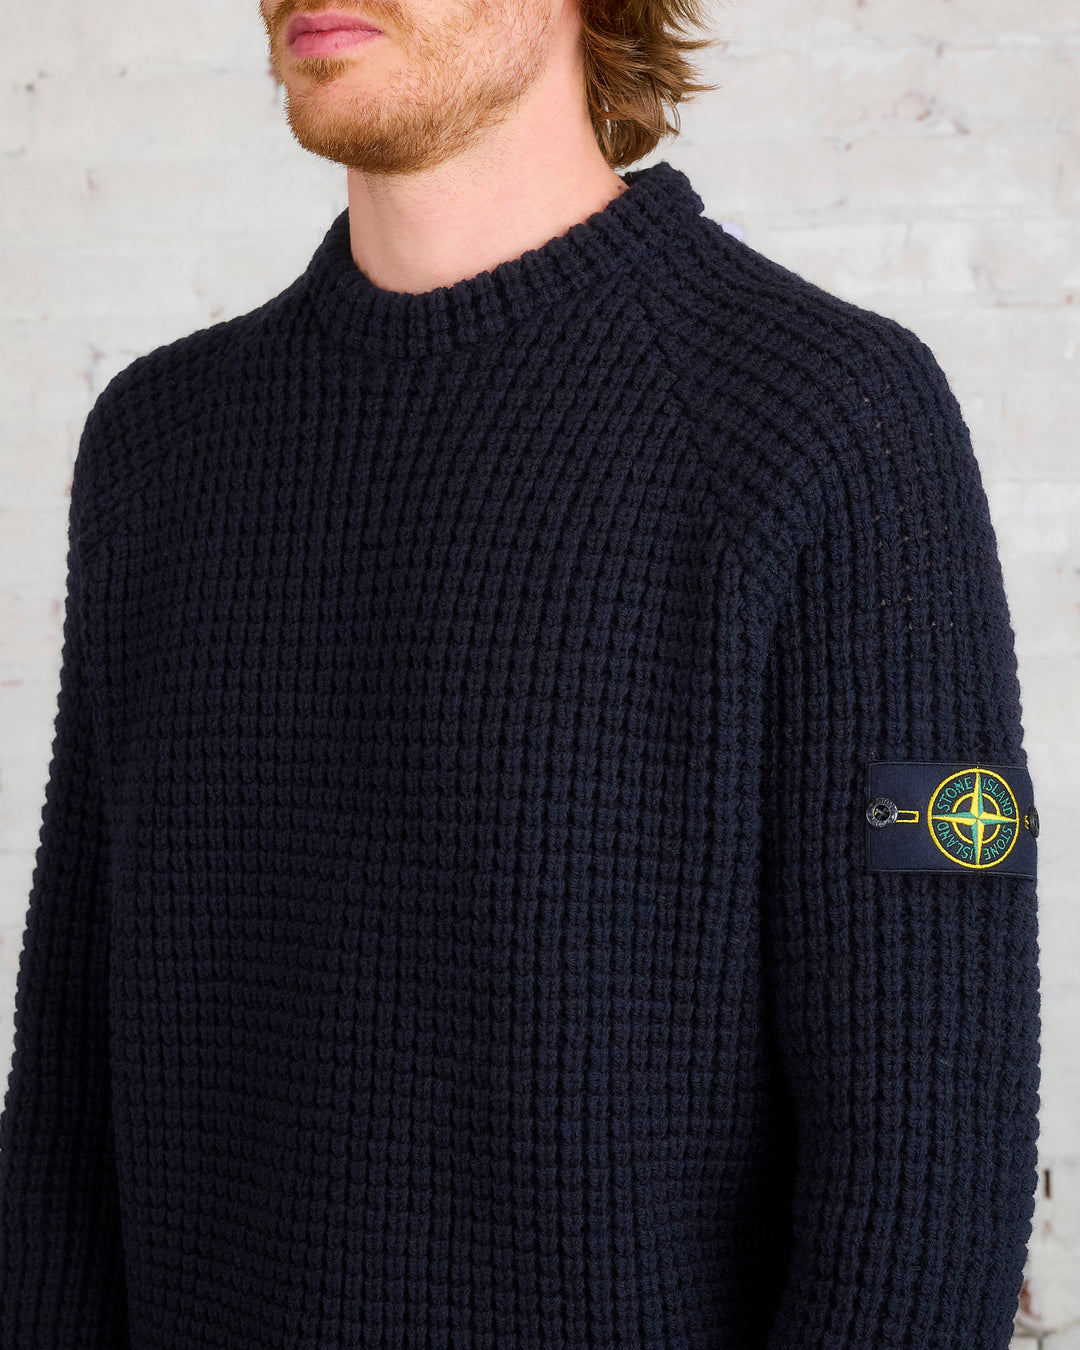 Stone Island Geelong Wool Textured Sweater Black